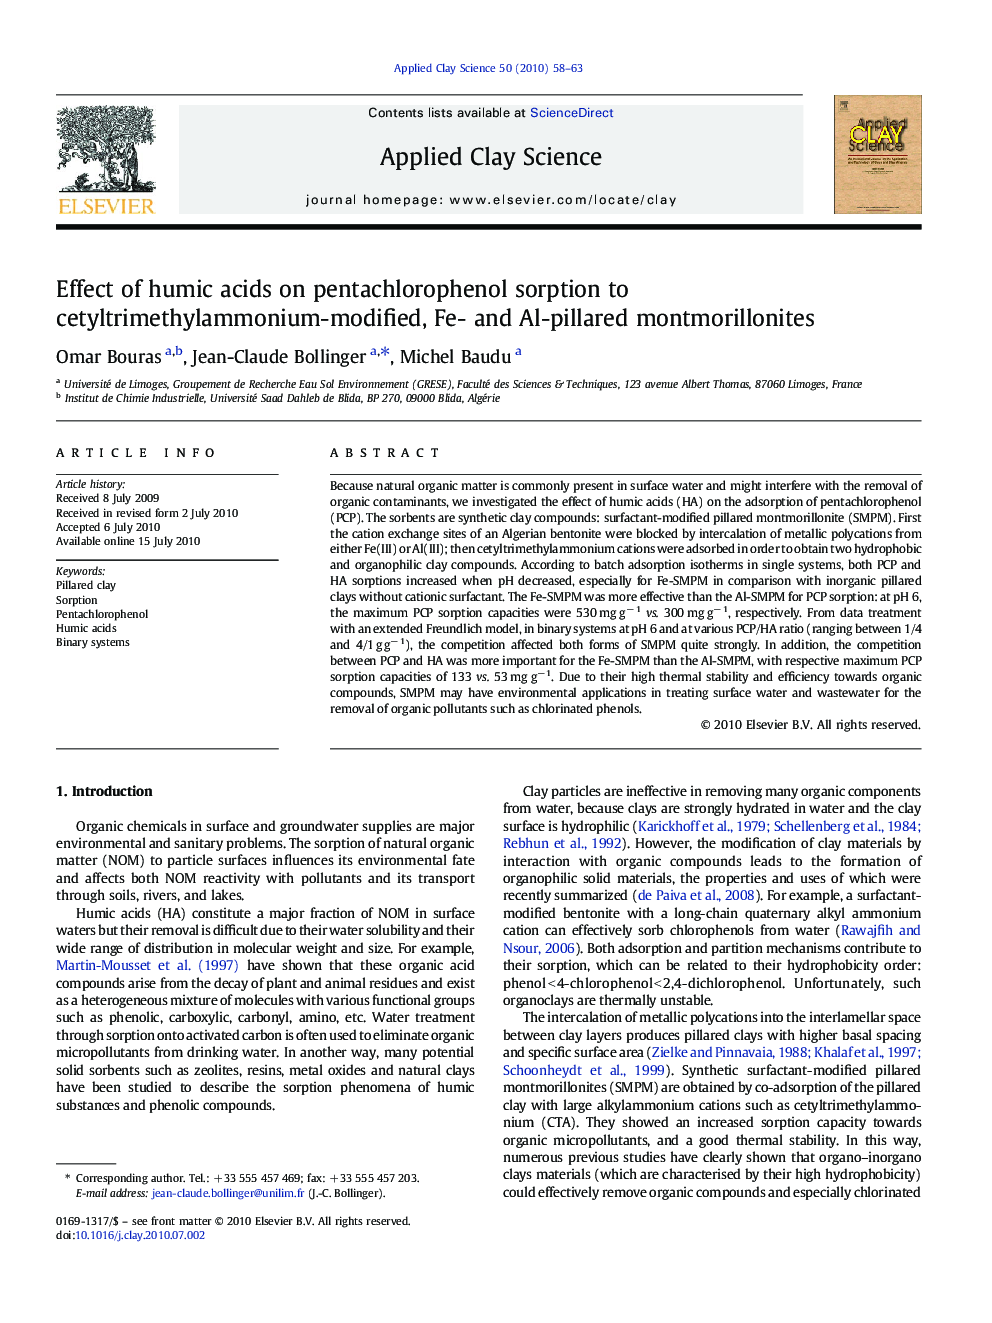 Effect of humic acids on pentachlorophenol sorption to cetyltrimethylammonium-modified, Fe- and Al-pillared montmorillonites